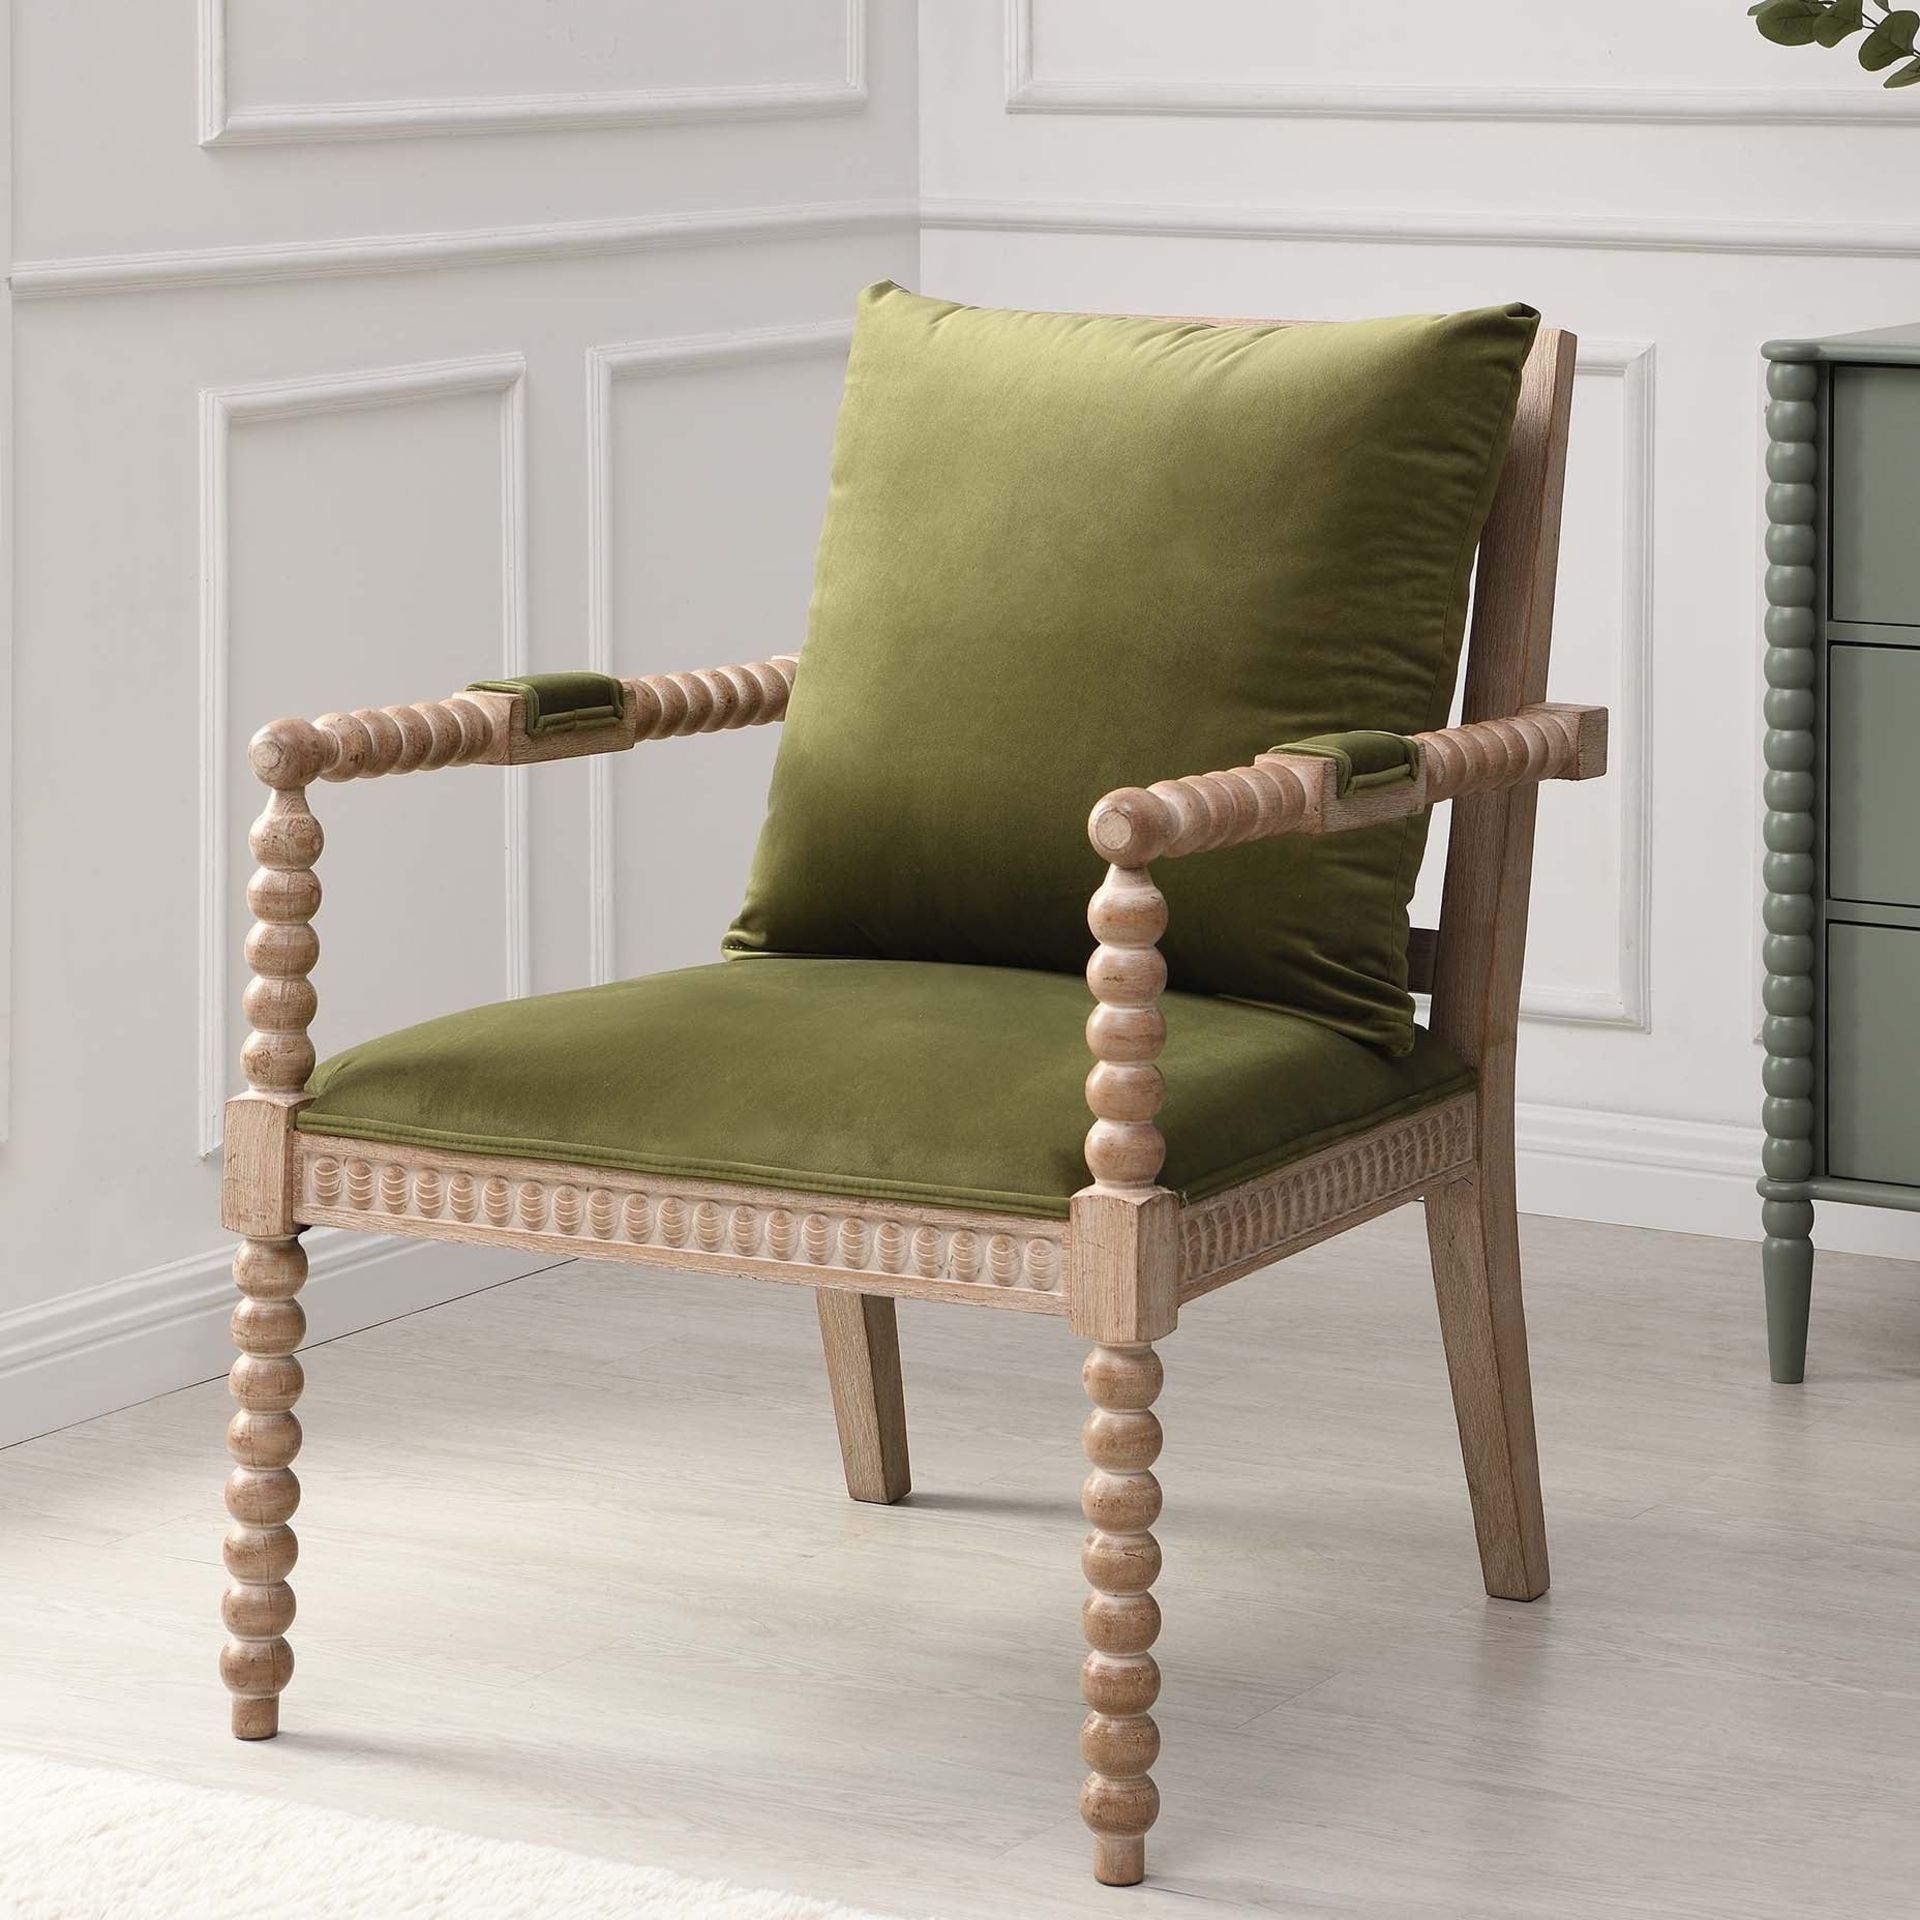 Hemingford Moss Green Velvet Bobbin Armchair. - R19.6. RRP £329.99. The chair has padded seat and